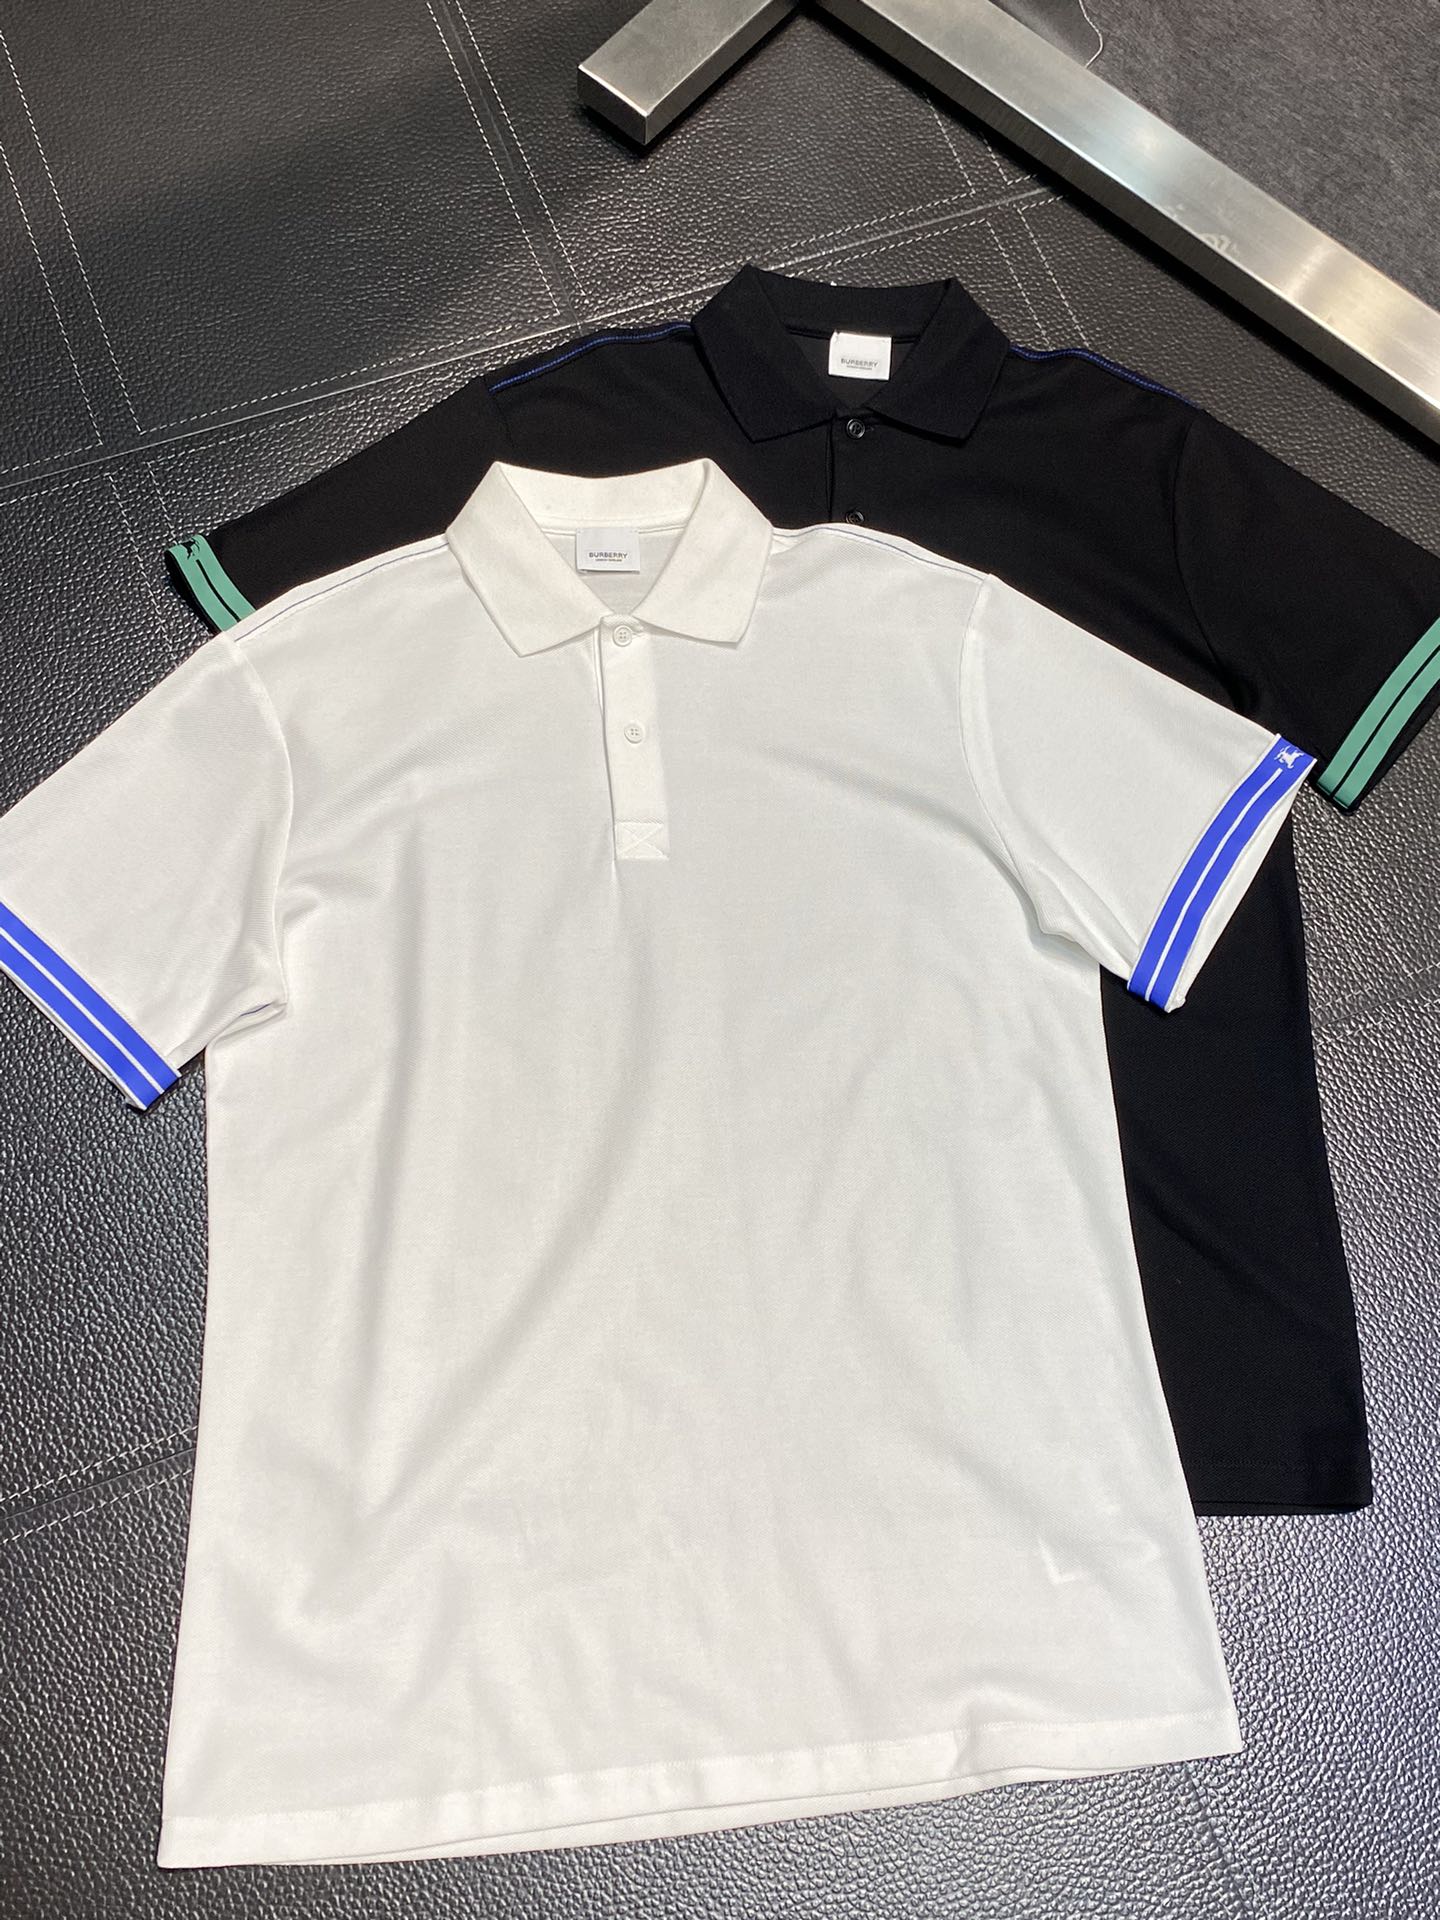 Burberry Clothing Polo T-Shirt Men Fashion Short Sleeve